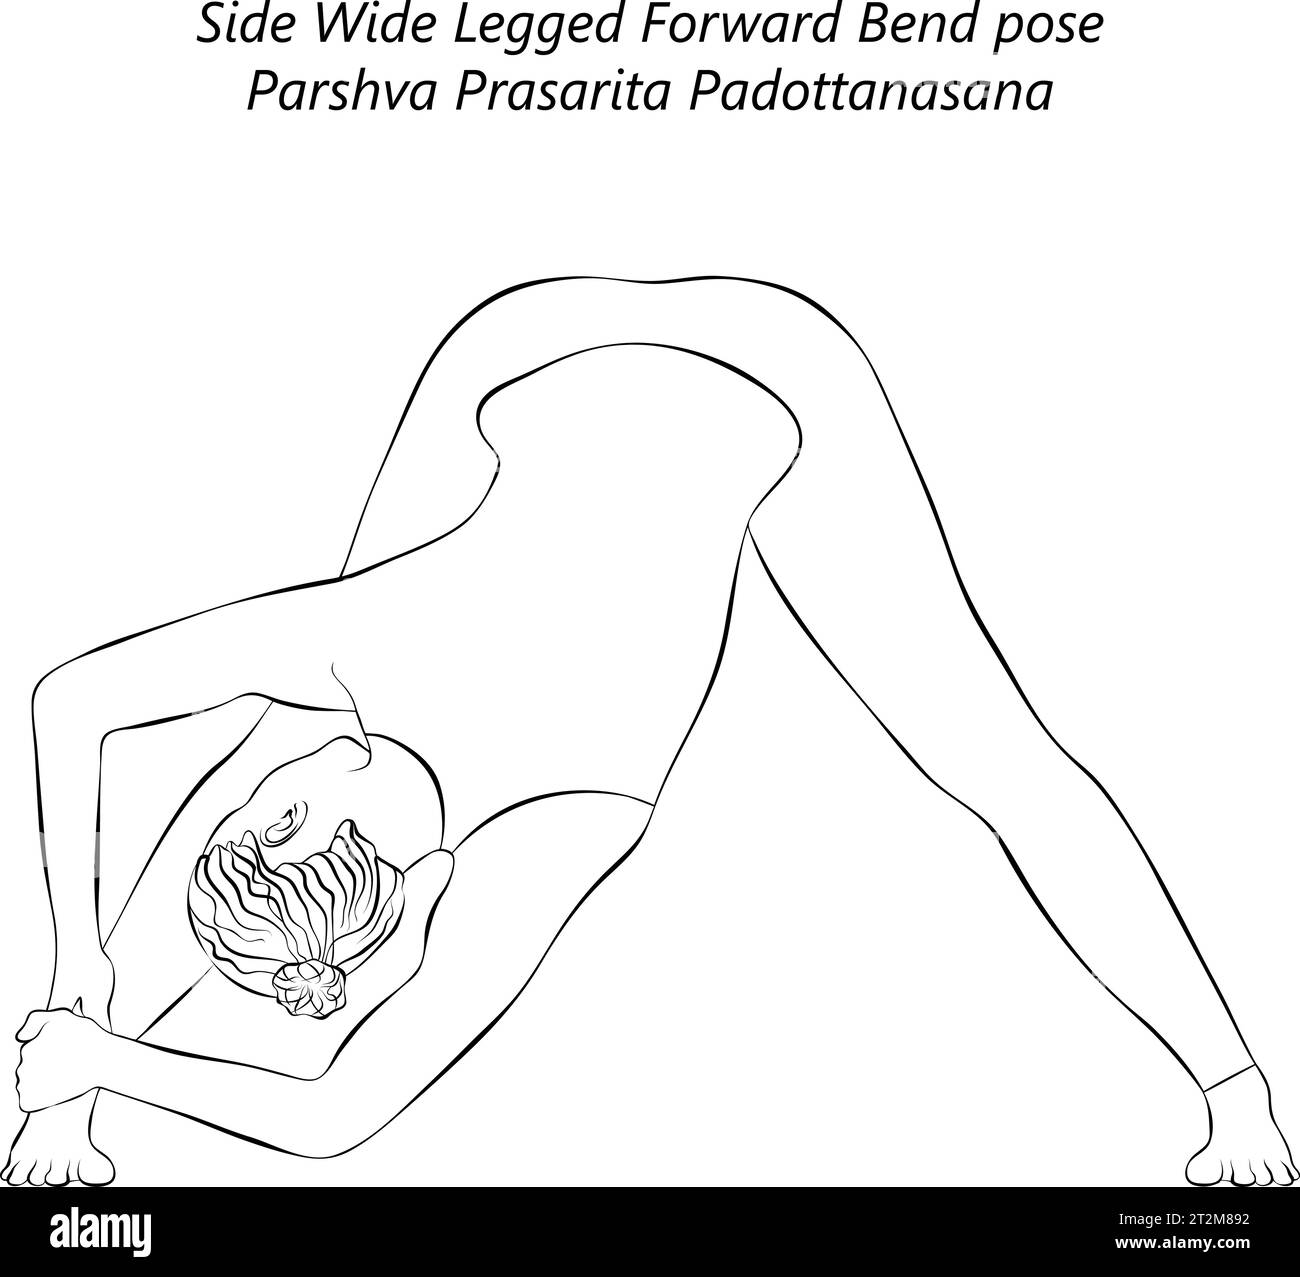 Sketch of young woman doing yoga Parshva Prasarita Padottanasana. Side Wide Legged Forward Bend pose. Isolated vector illustration. Stock Vector